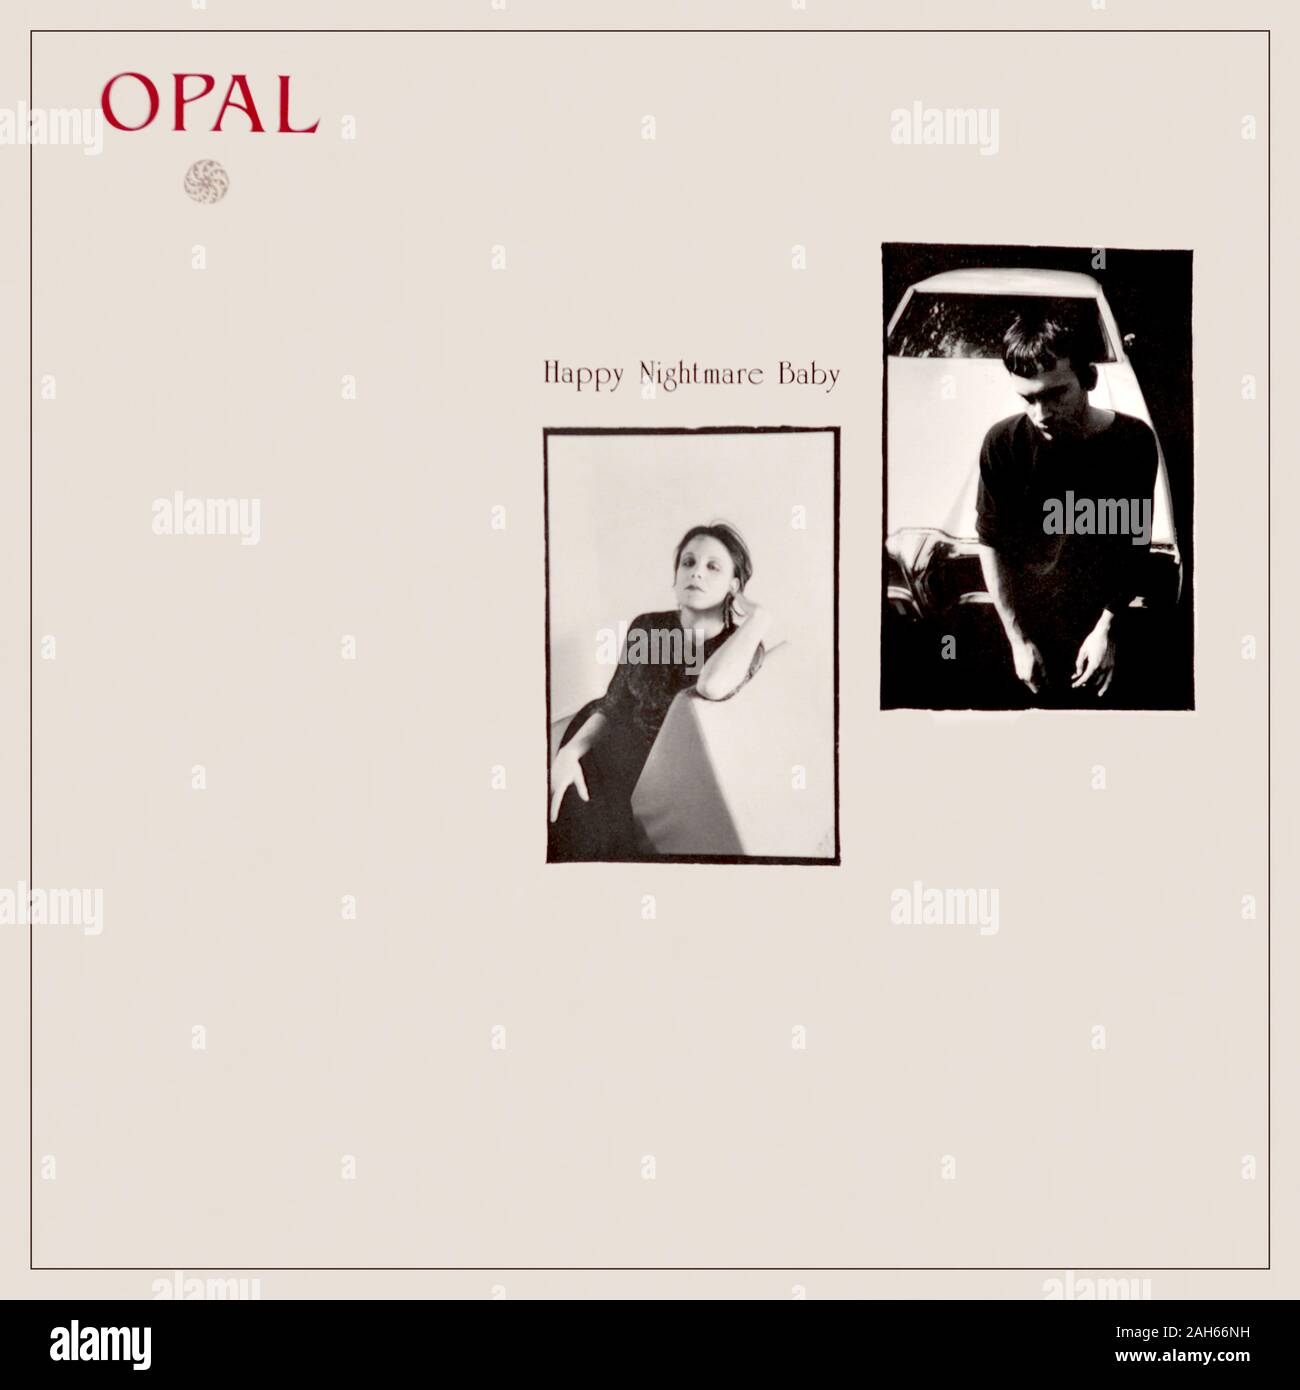 Opal - original Vinyl Album Cover - Happy Nightmare Baby - 1987 Stockfoto